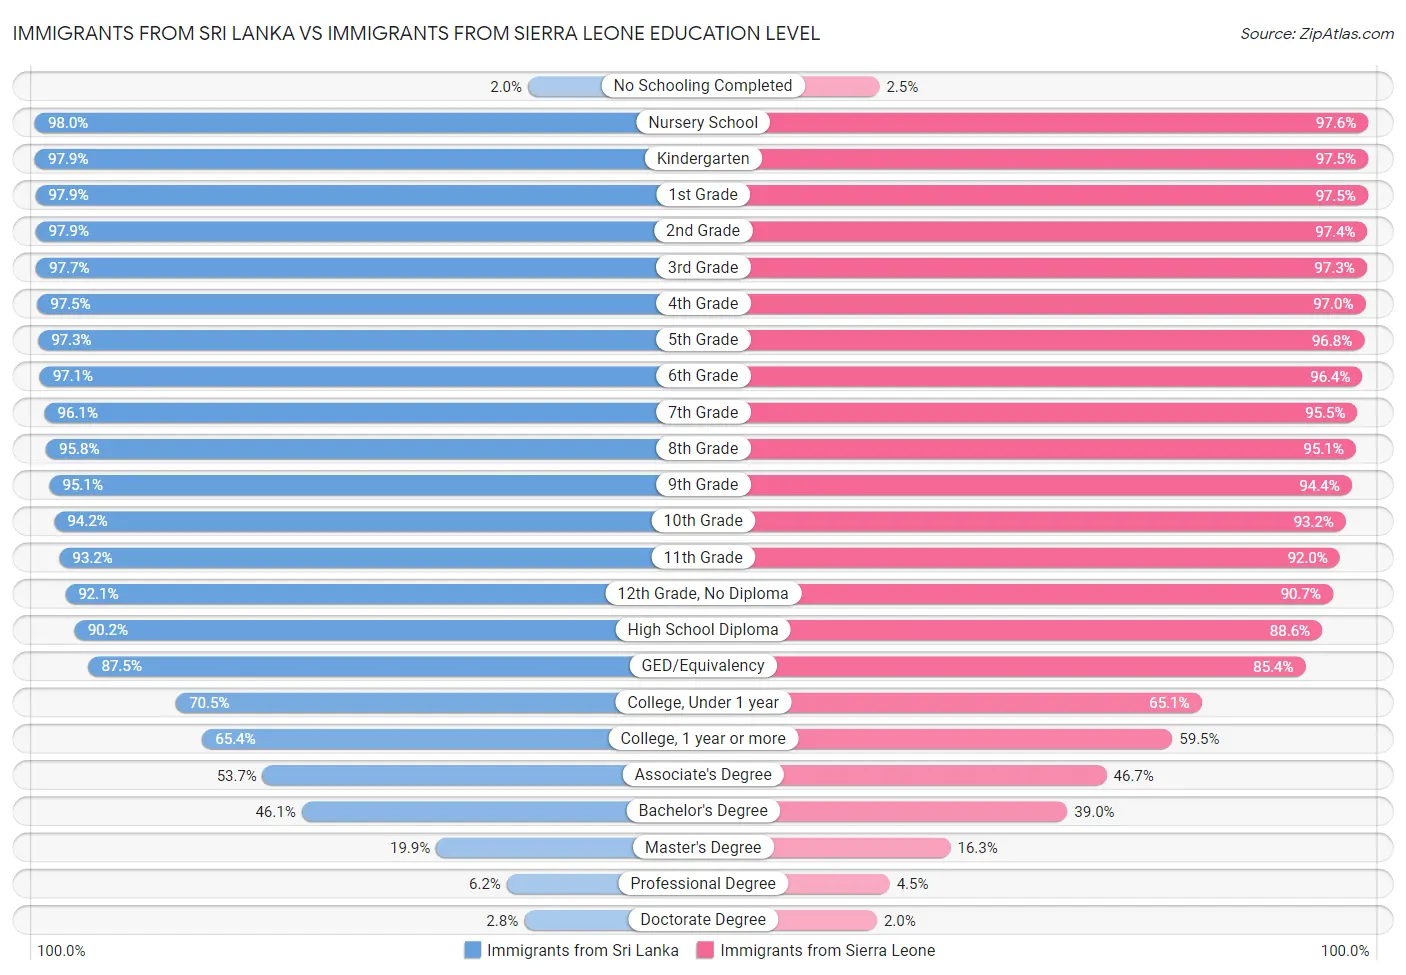 Immigrants from Sri Lanka vs Immigrants from Sierra Leone Education Level